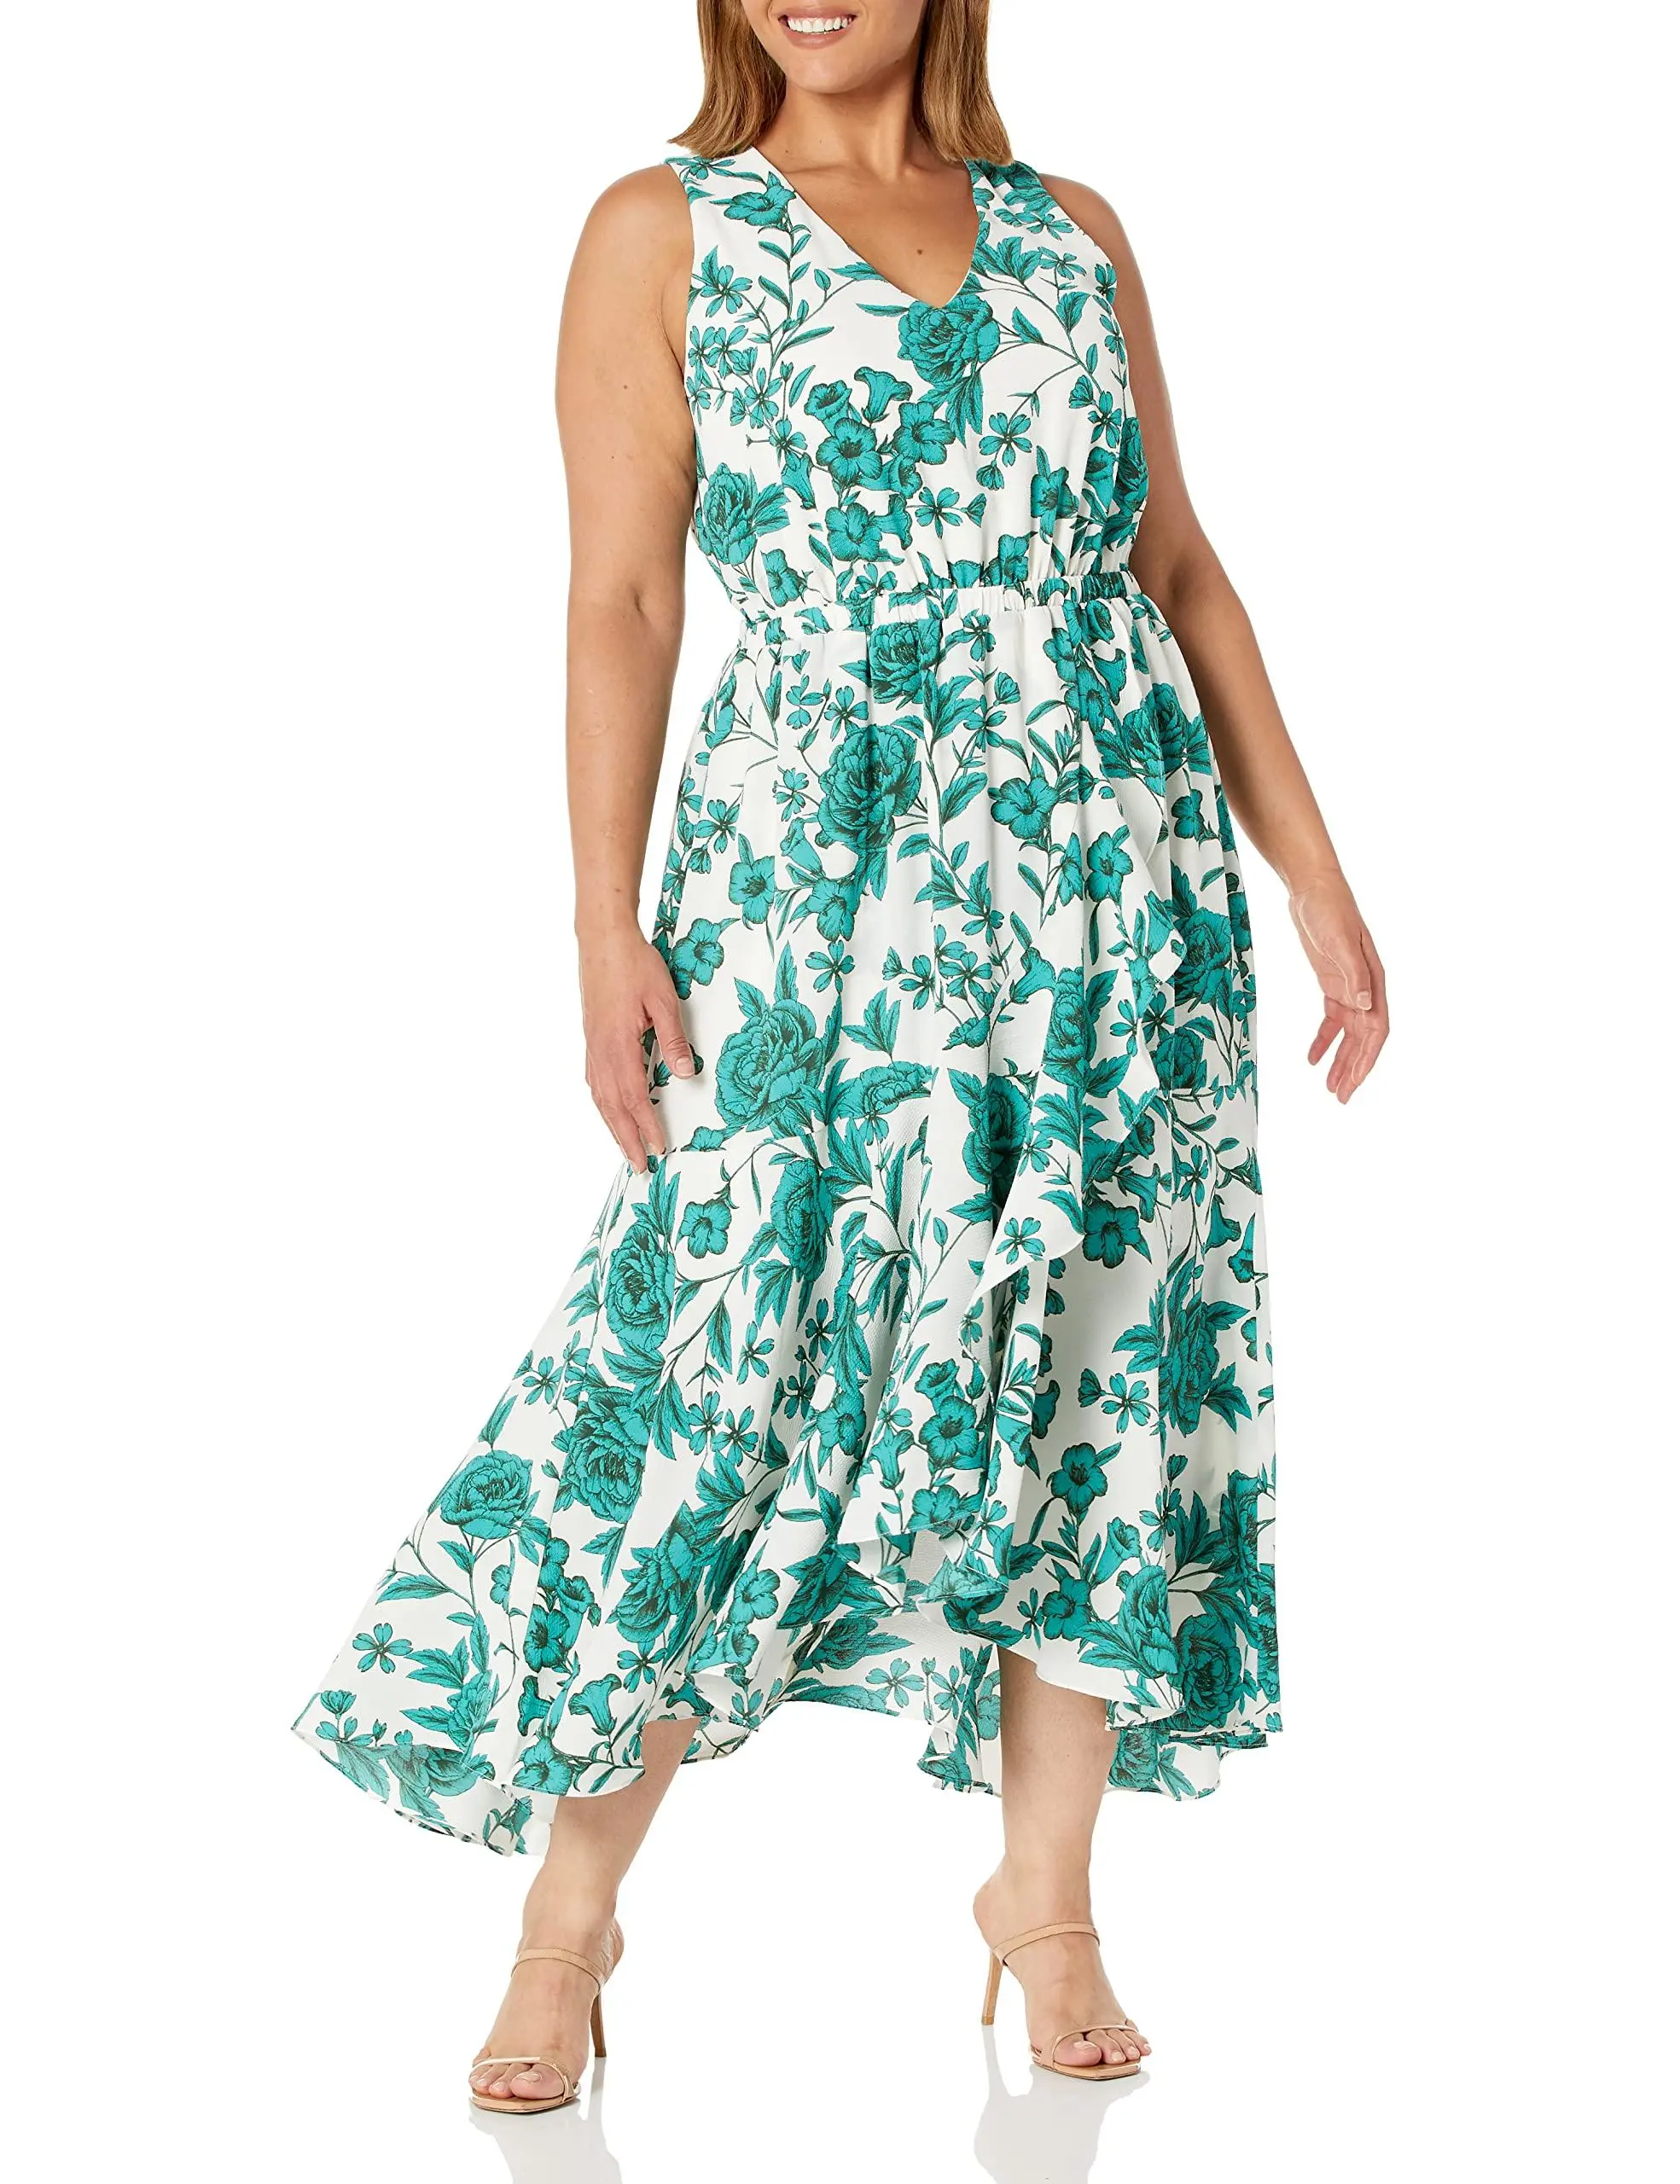 Women's Gabby Skye Dresses - up to −51% | Stylight